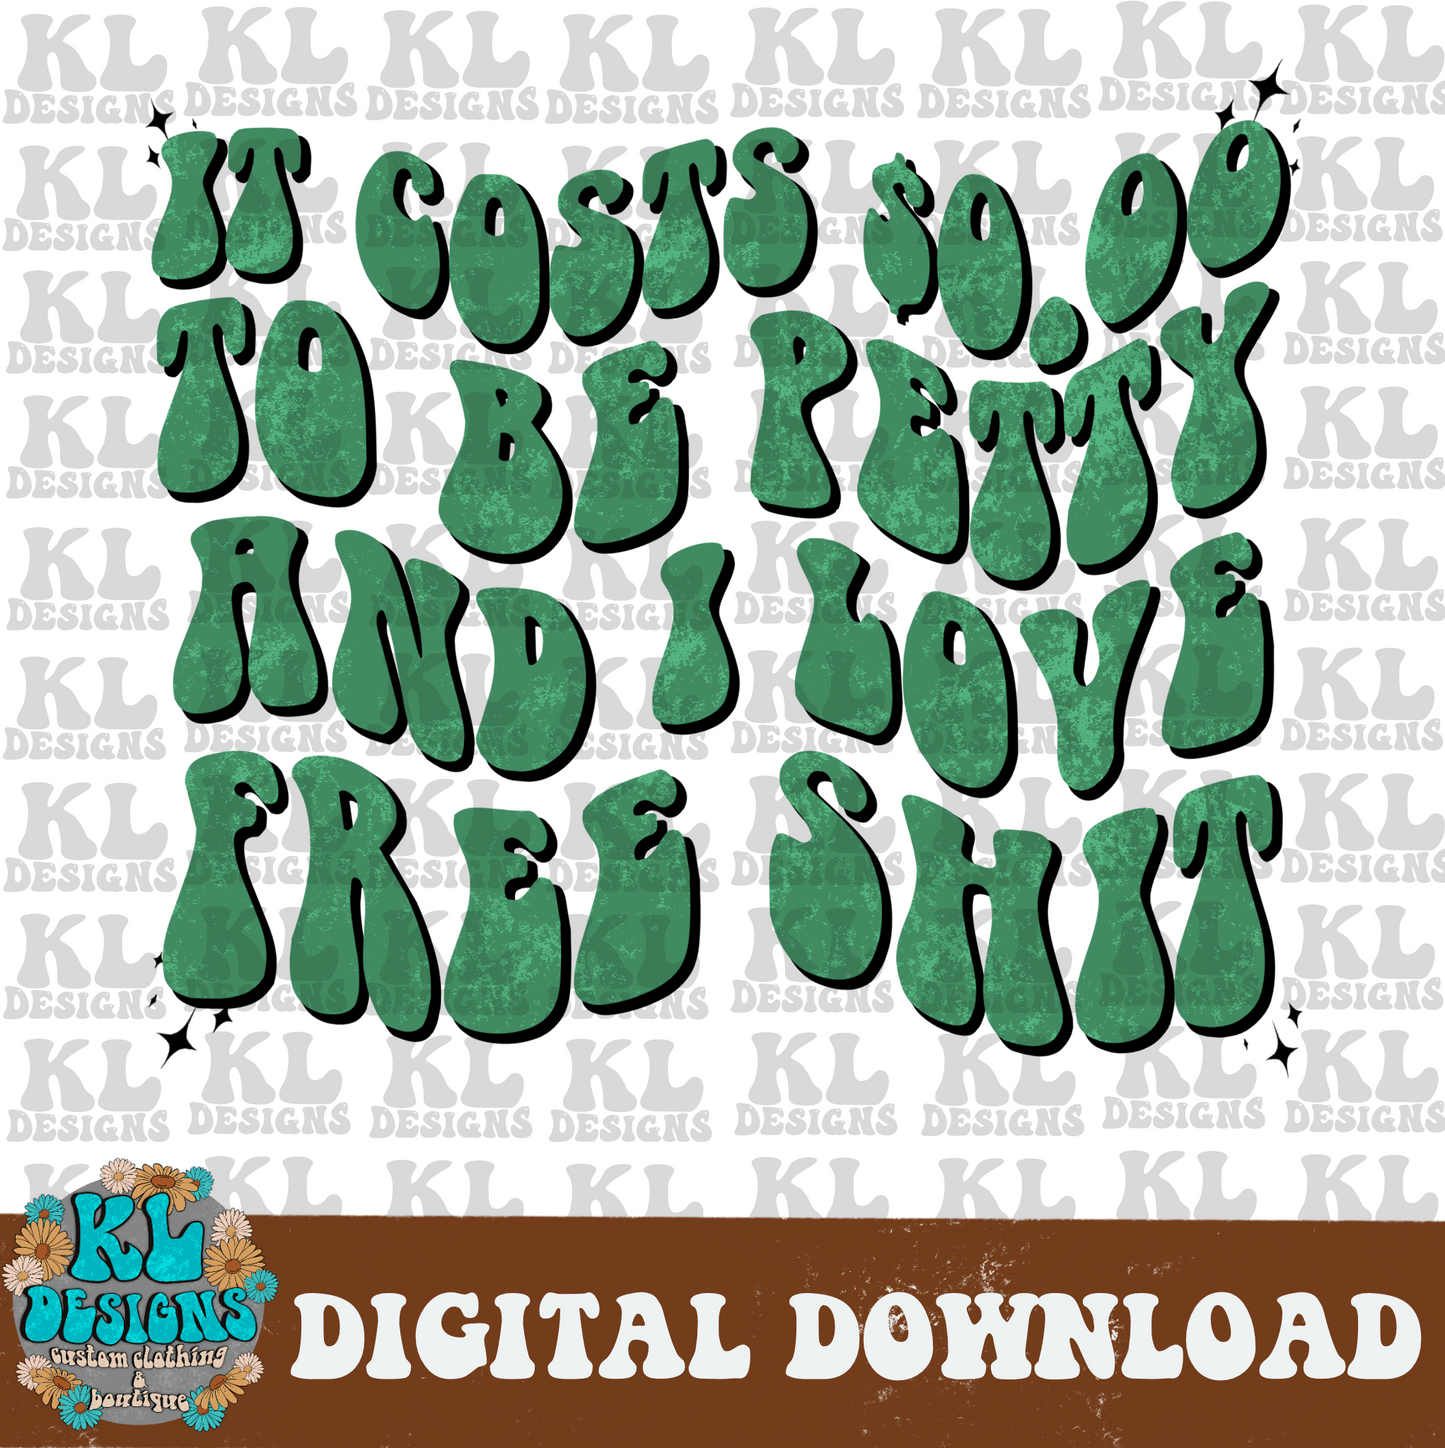 Free Petty | Digital Download